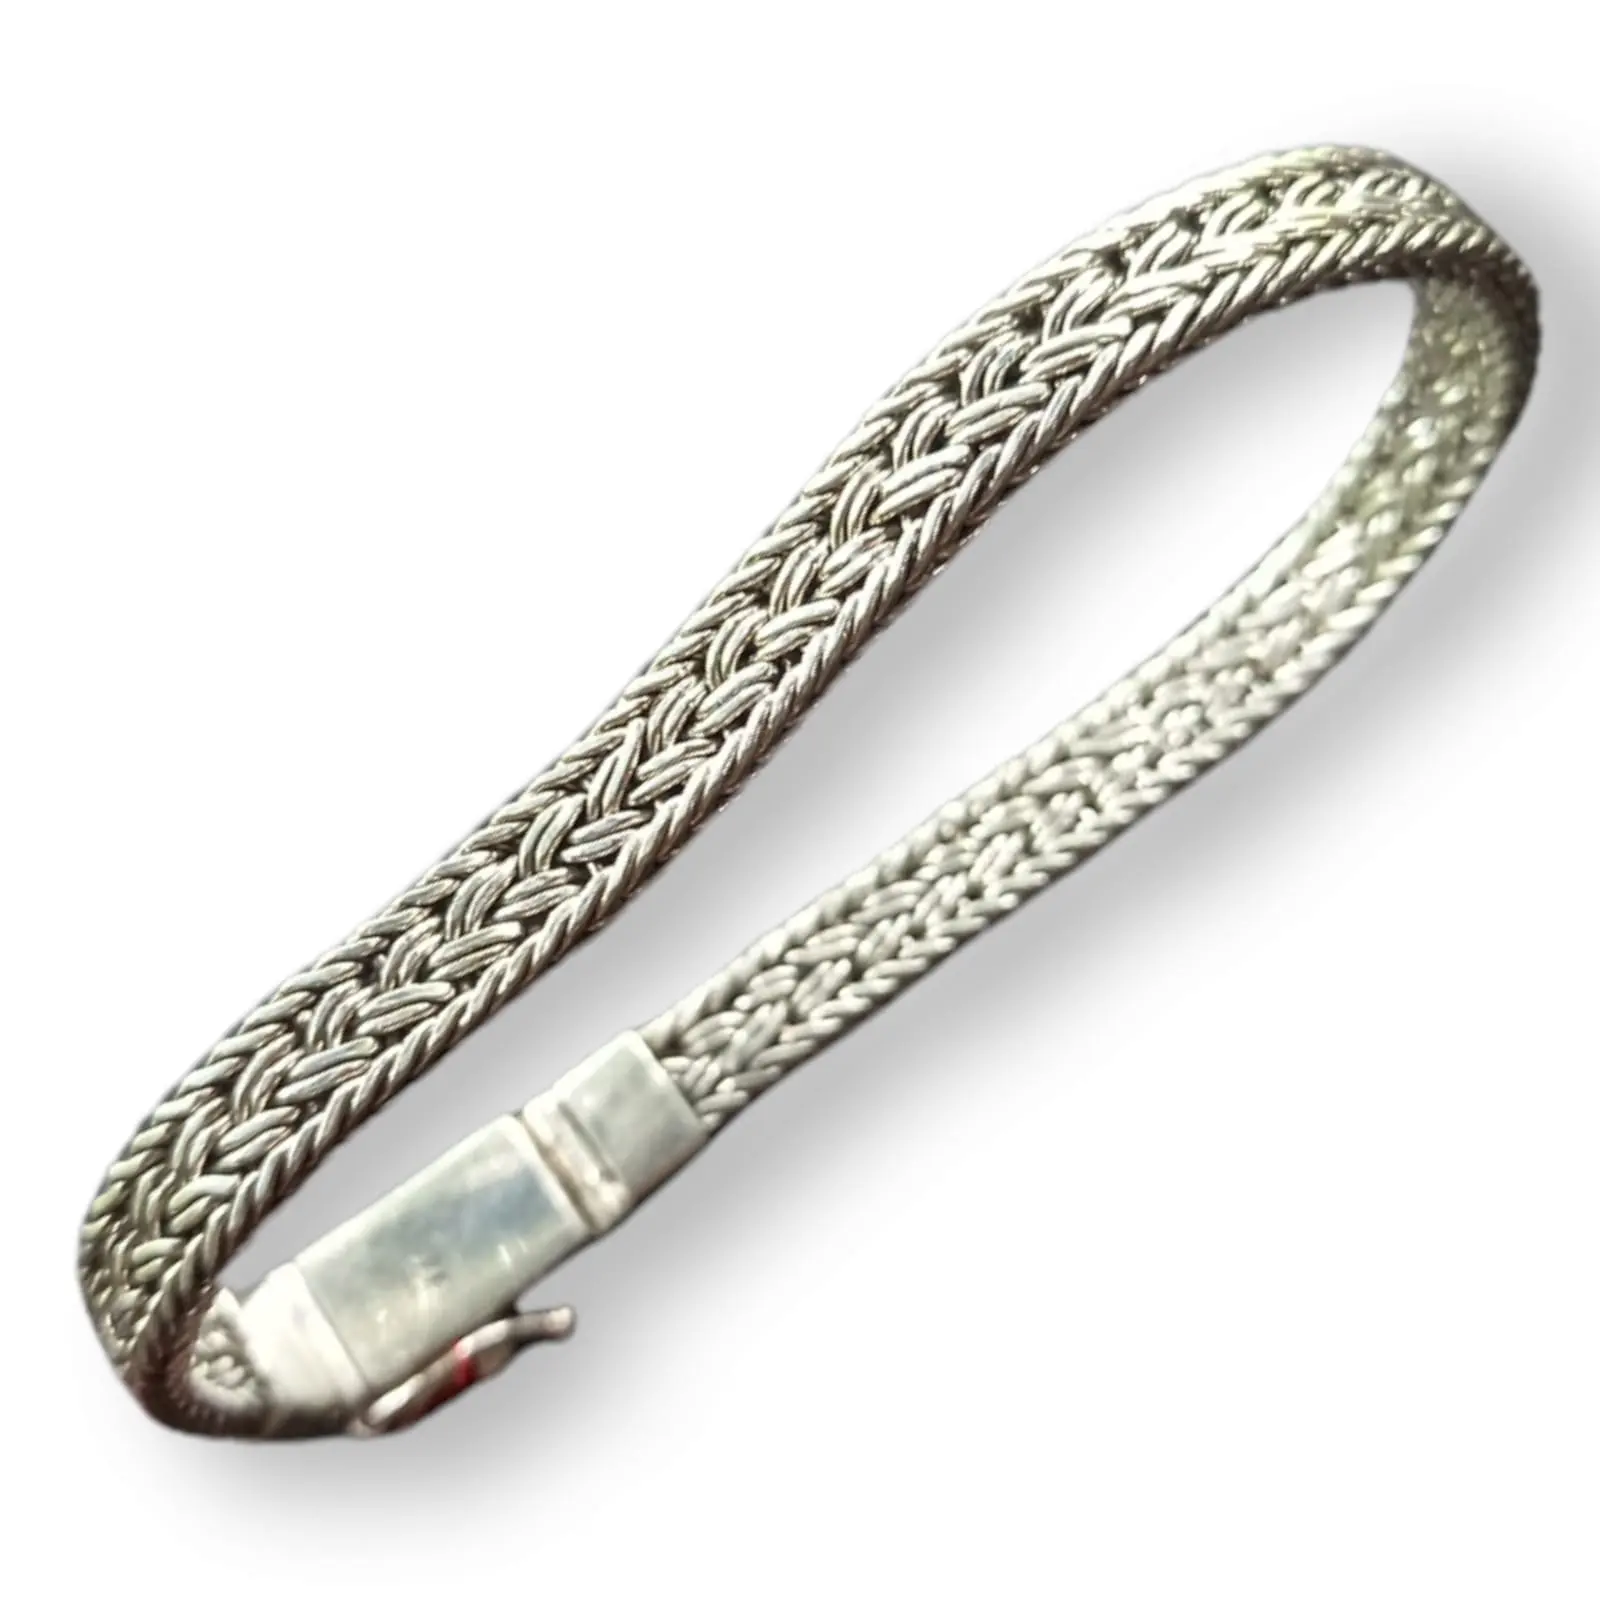 NY-CHB001-Sterling Silver Bali Chain Bracelet Luxury Design Gift For Women And Men Unisex Silver Bracelet Classic Design